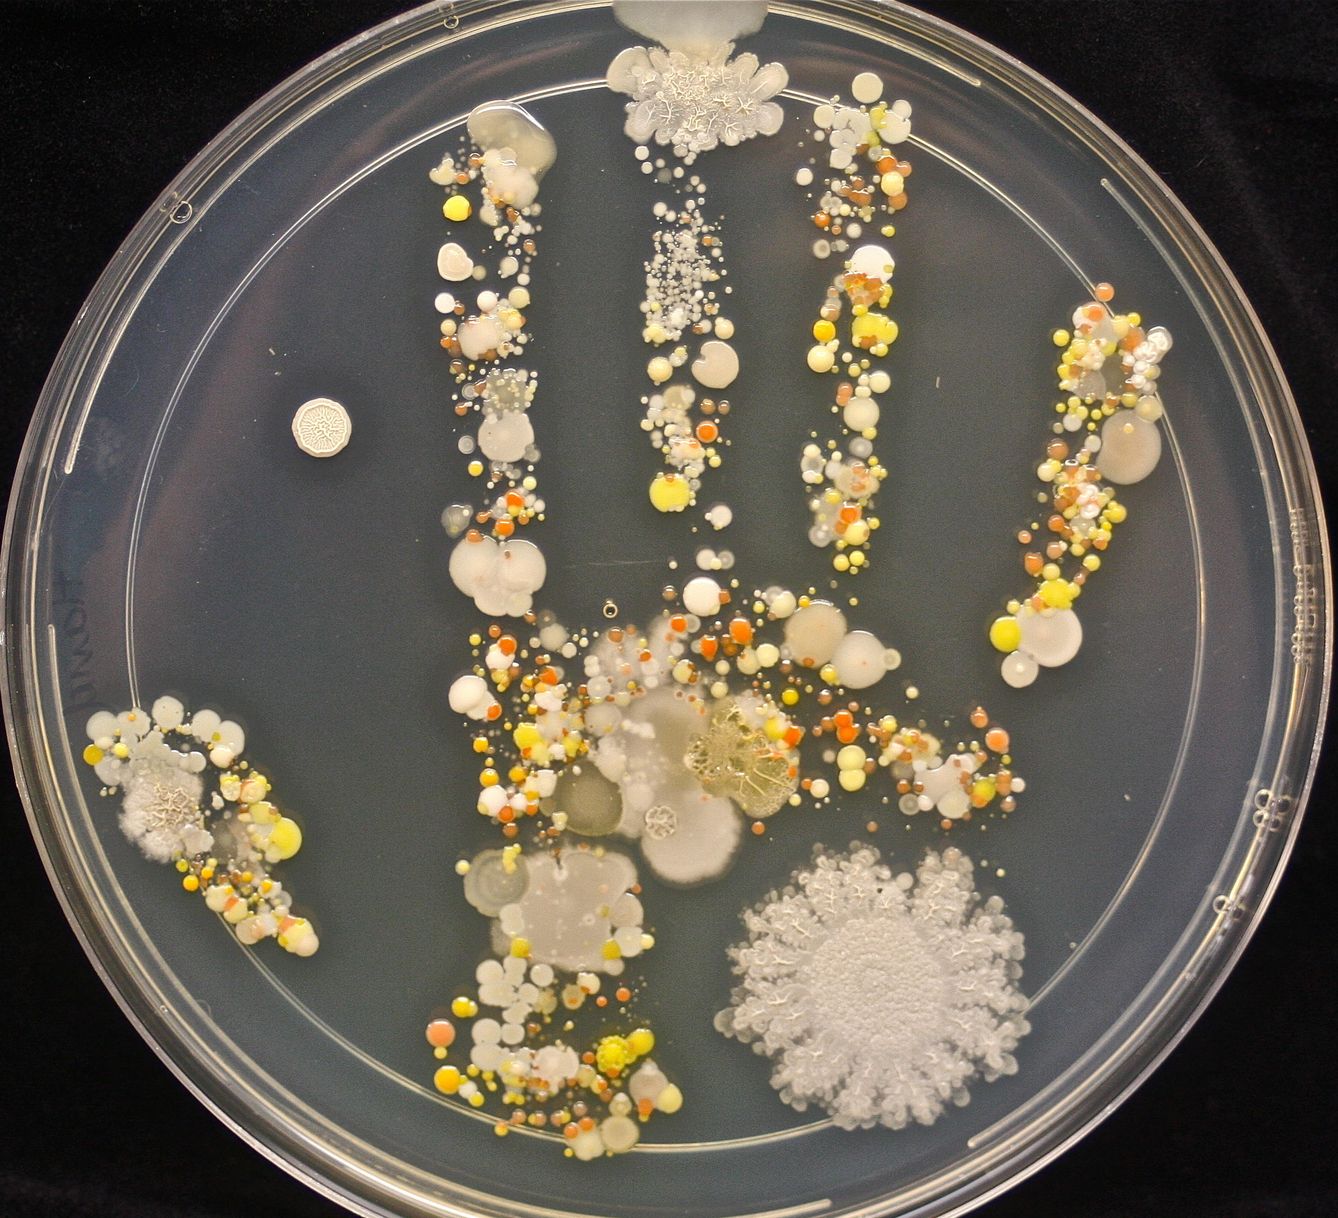 Foto: Estas son las bacterias que transporta una mano sucia. (Tasha Sturm/Microbe World/CC)